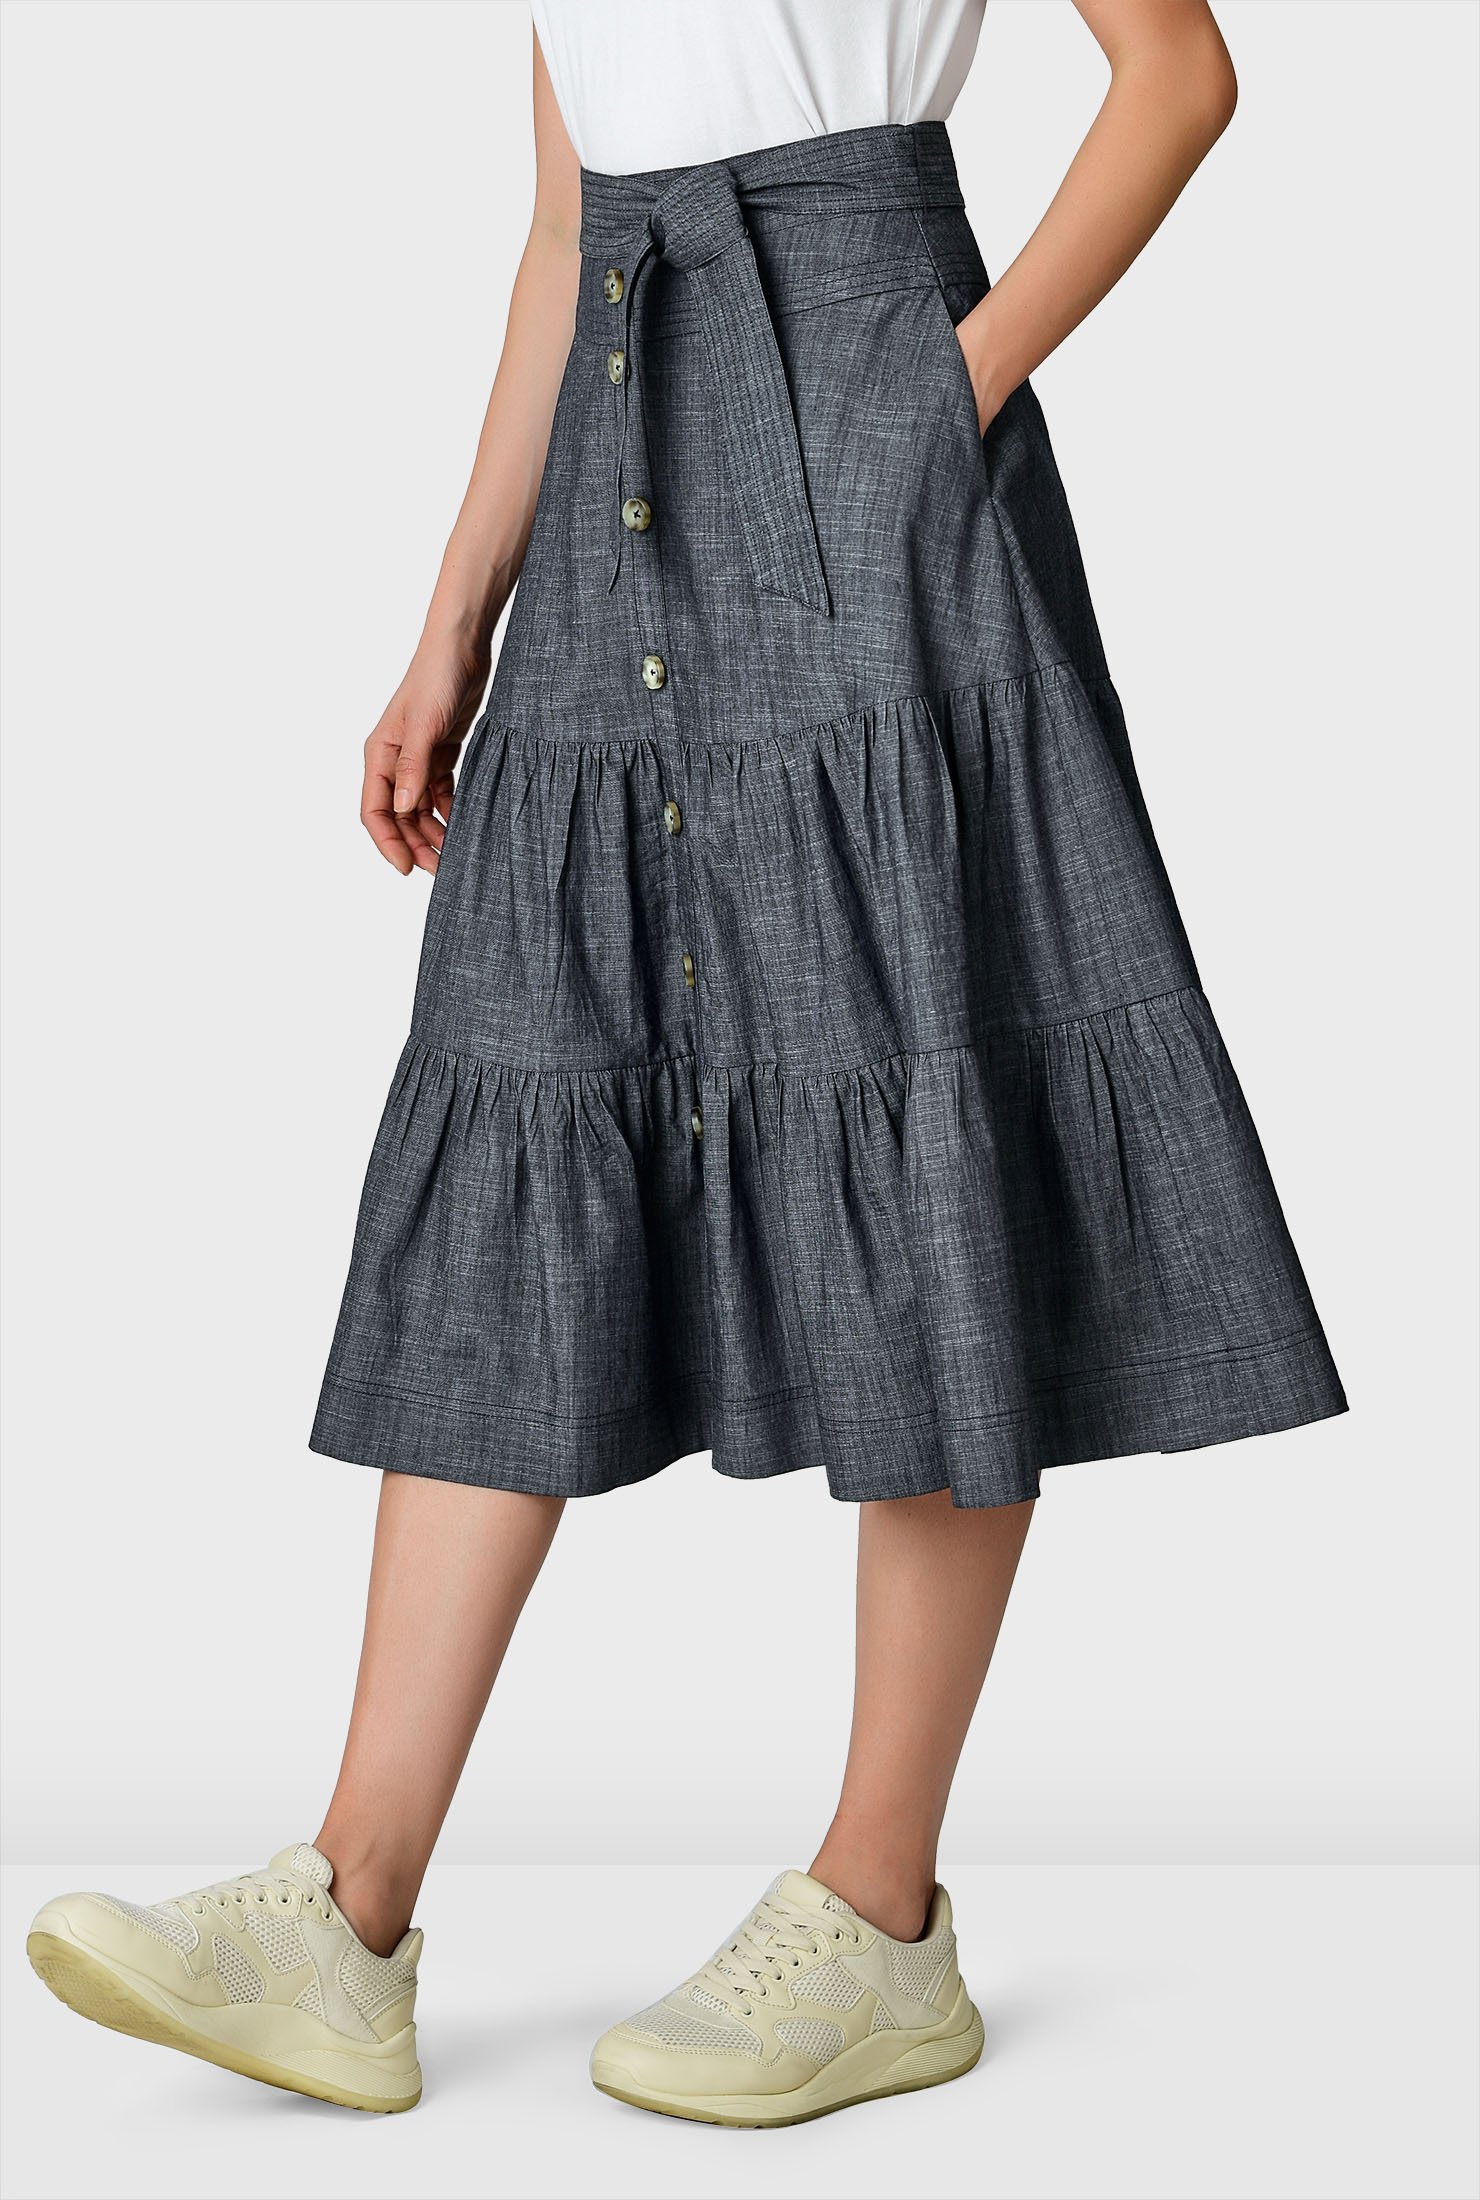 cotton gray skirt